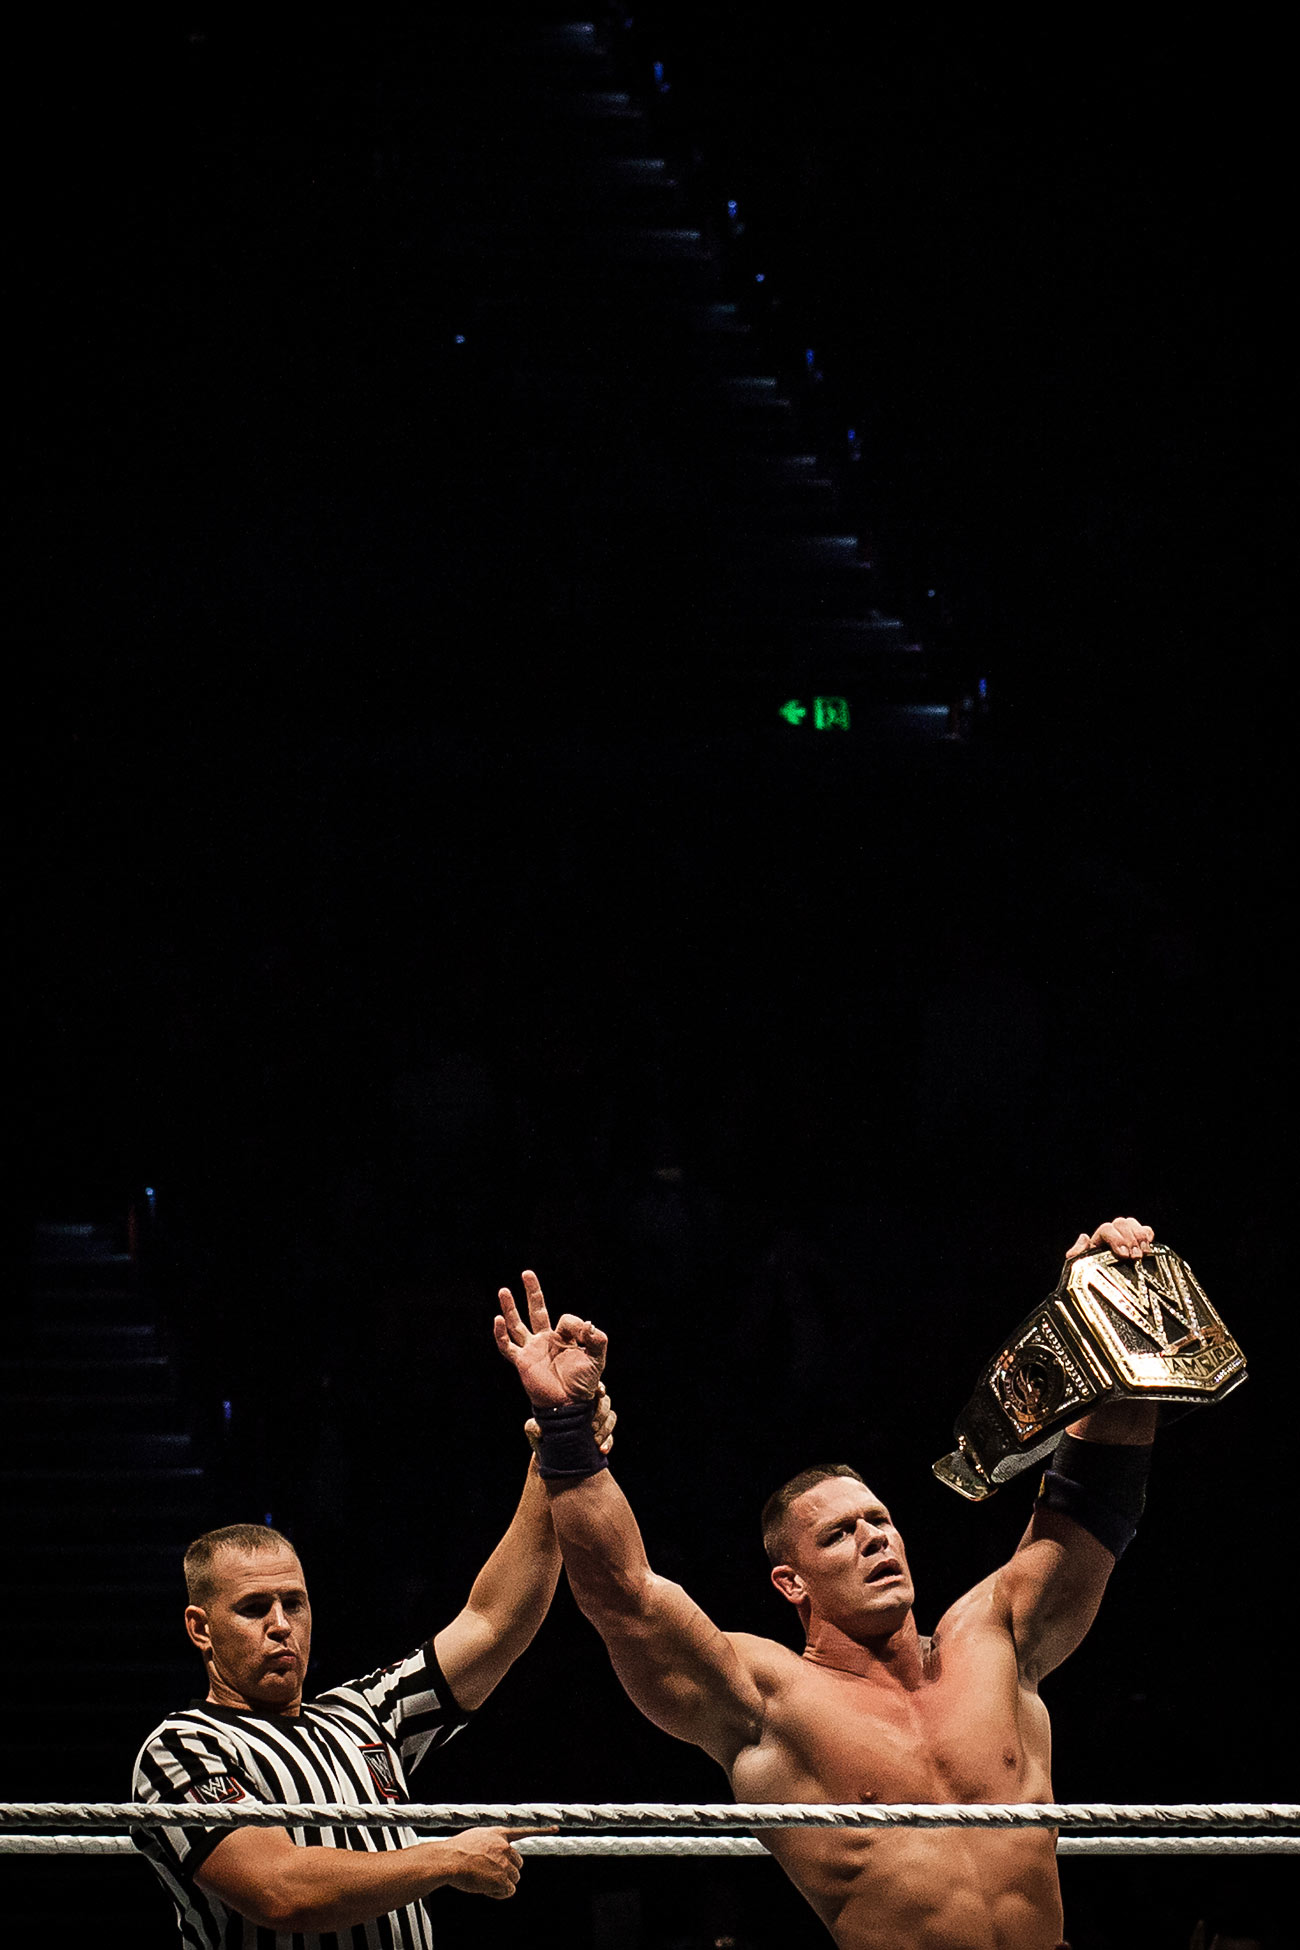 Professional wrestler and WWE Champion John Cena